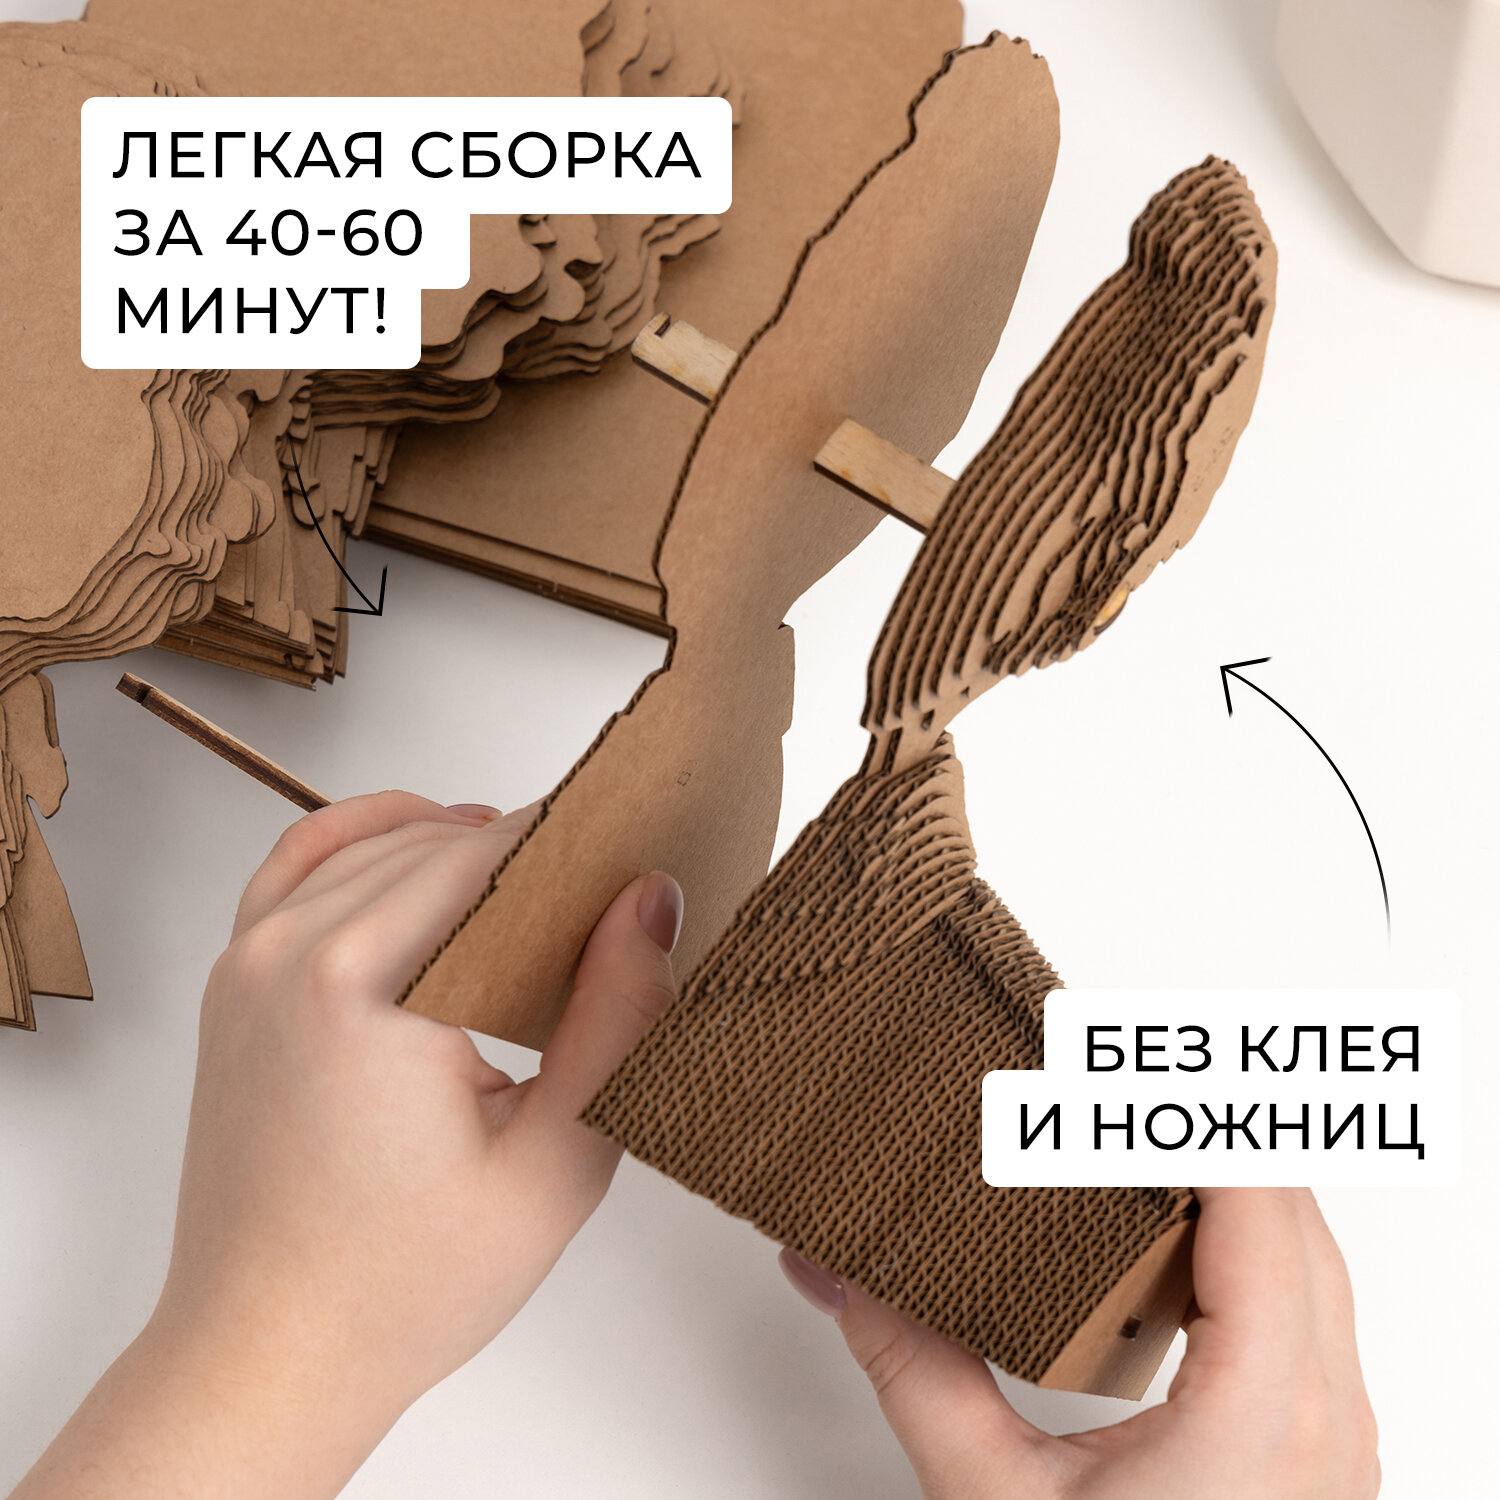 Картонный 3D конструктор-пазл "Сталин"